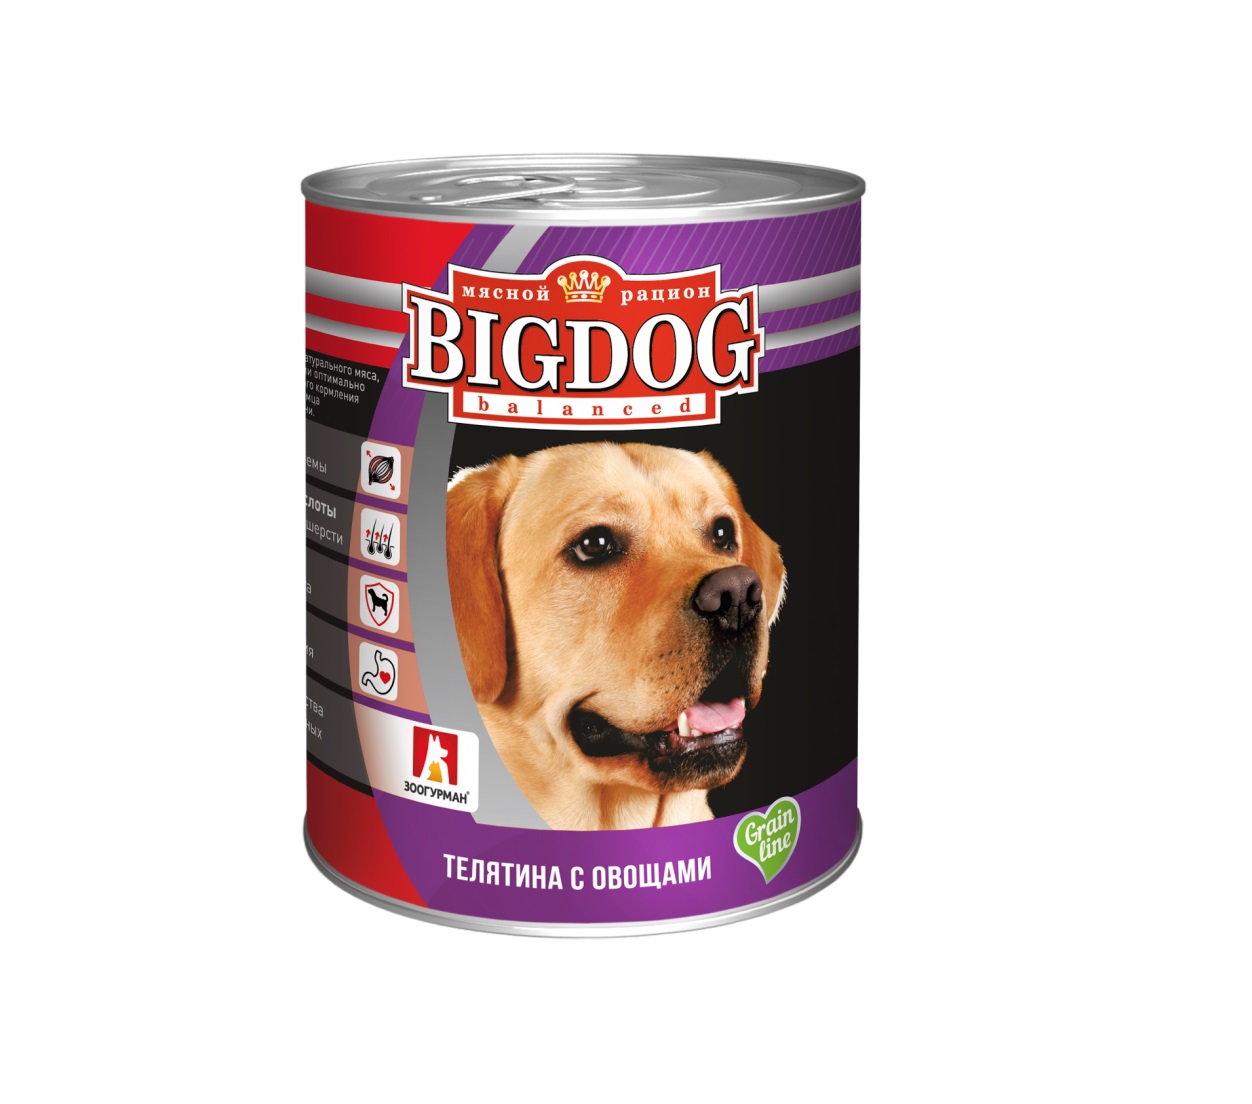 Биг Дог 850гр - Телятина/Овощи (Big Dog), Зоогурман